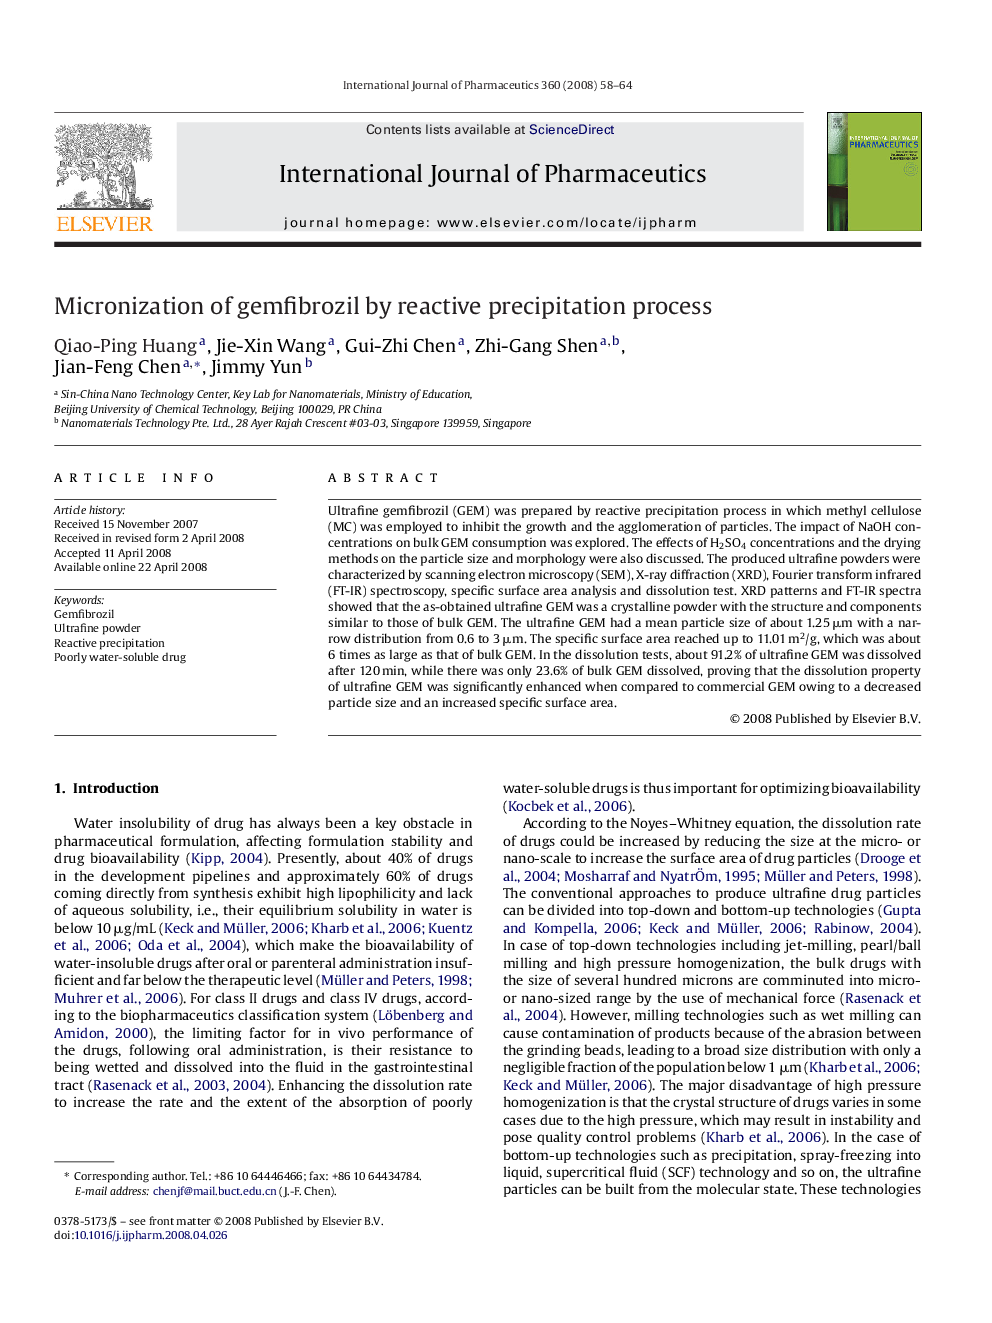 Micronization of gemfibrozil by reactive precipitation process